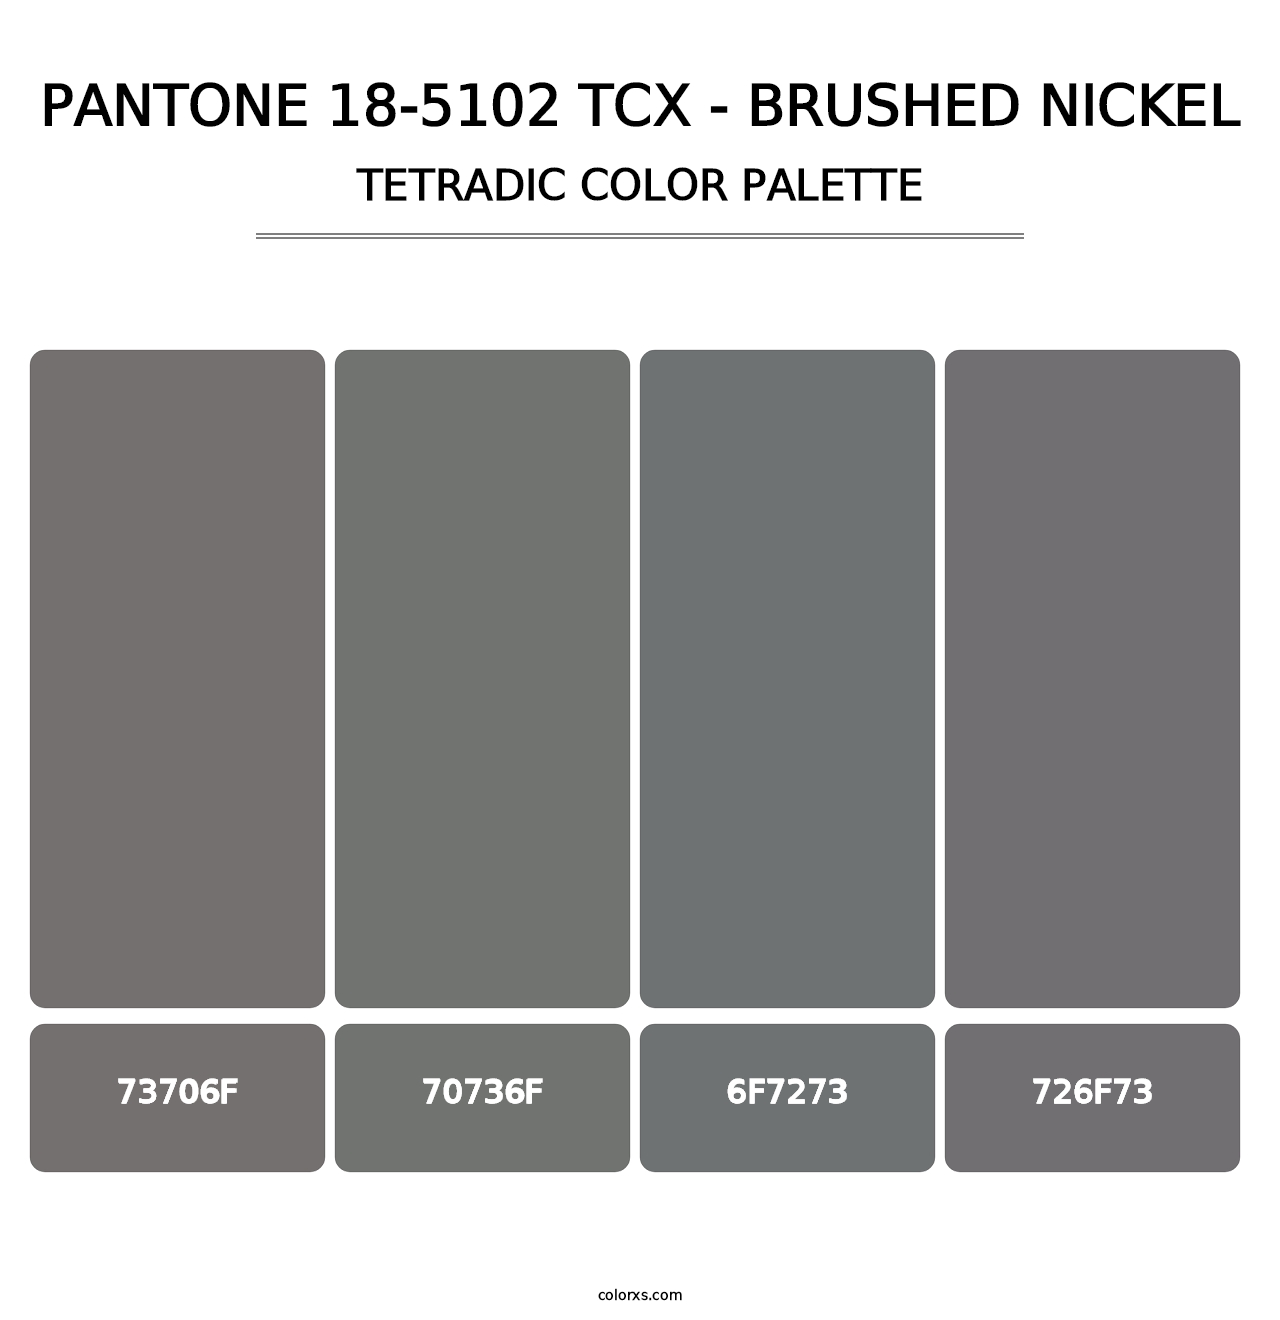 PANTONE 18-5102 TCX - Brushed Nickel - Tetradic Color Palette